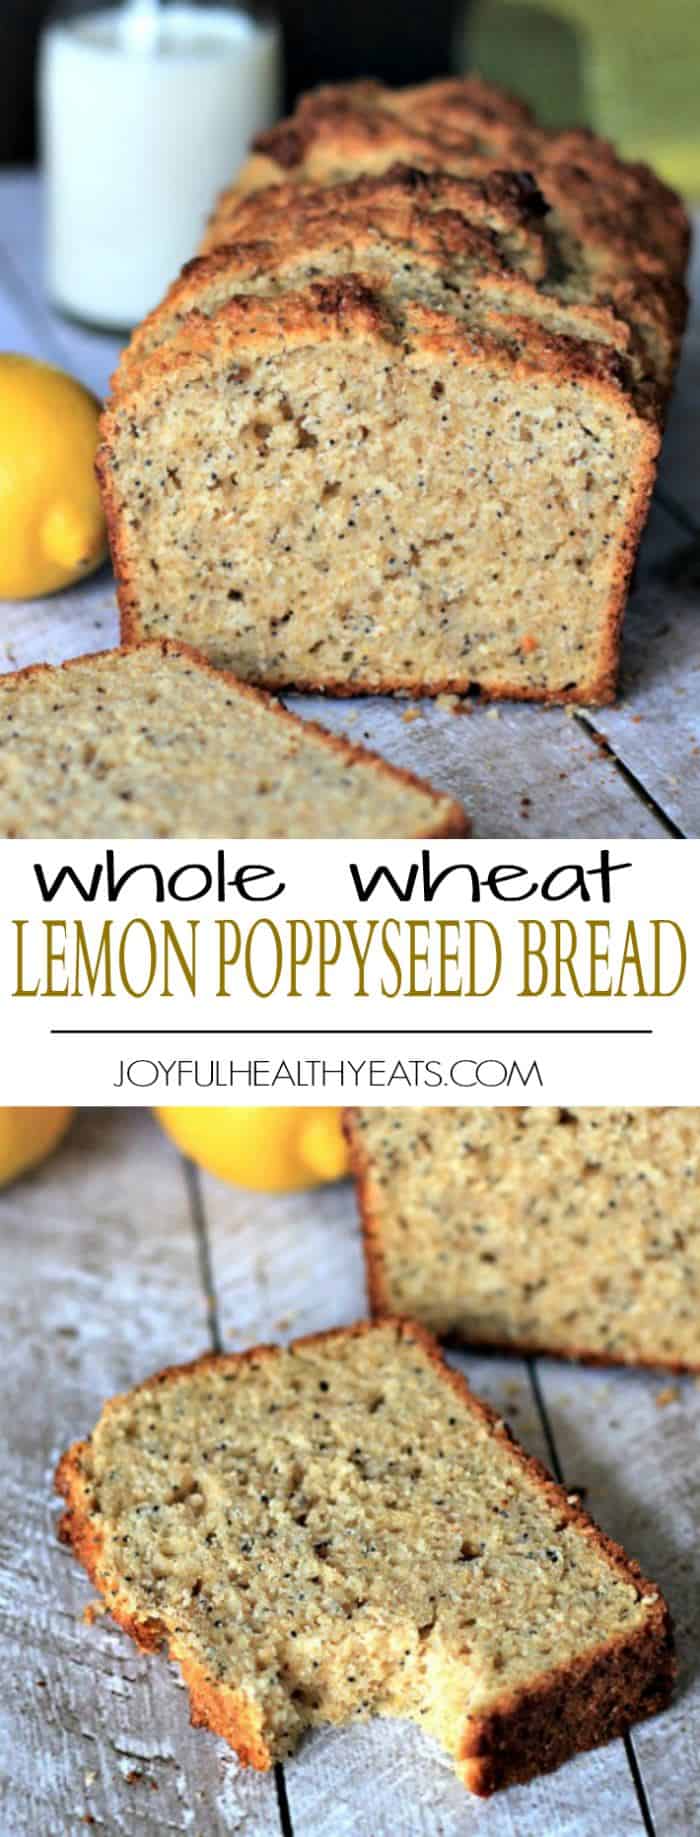 Lemony moist and naturally sweet Whole Wheat Lemon Poppyseed Bread with an extra nutrient boost from chia seeds and greek yogurt. | joyfulhealthyeats.com #recipes